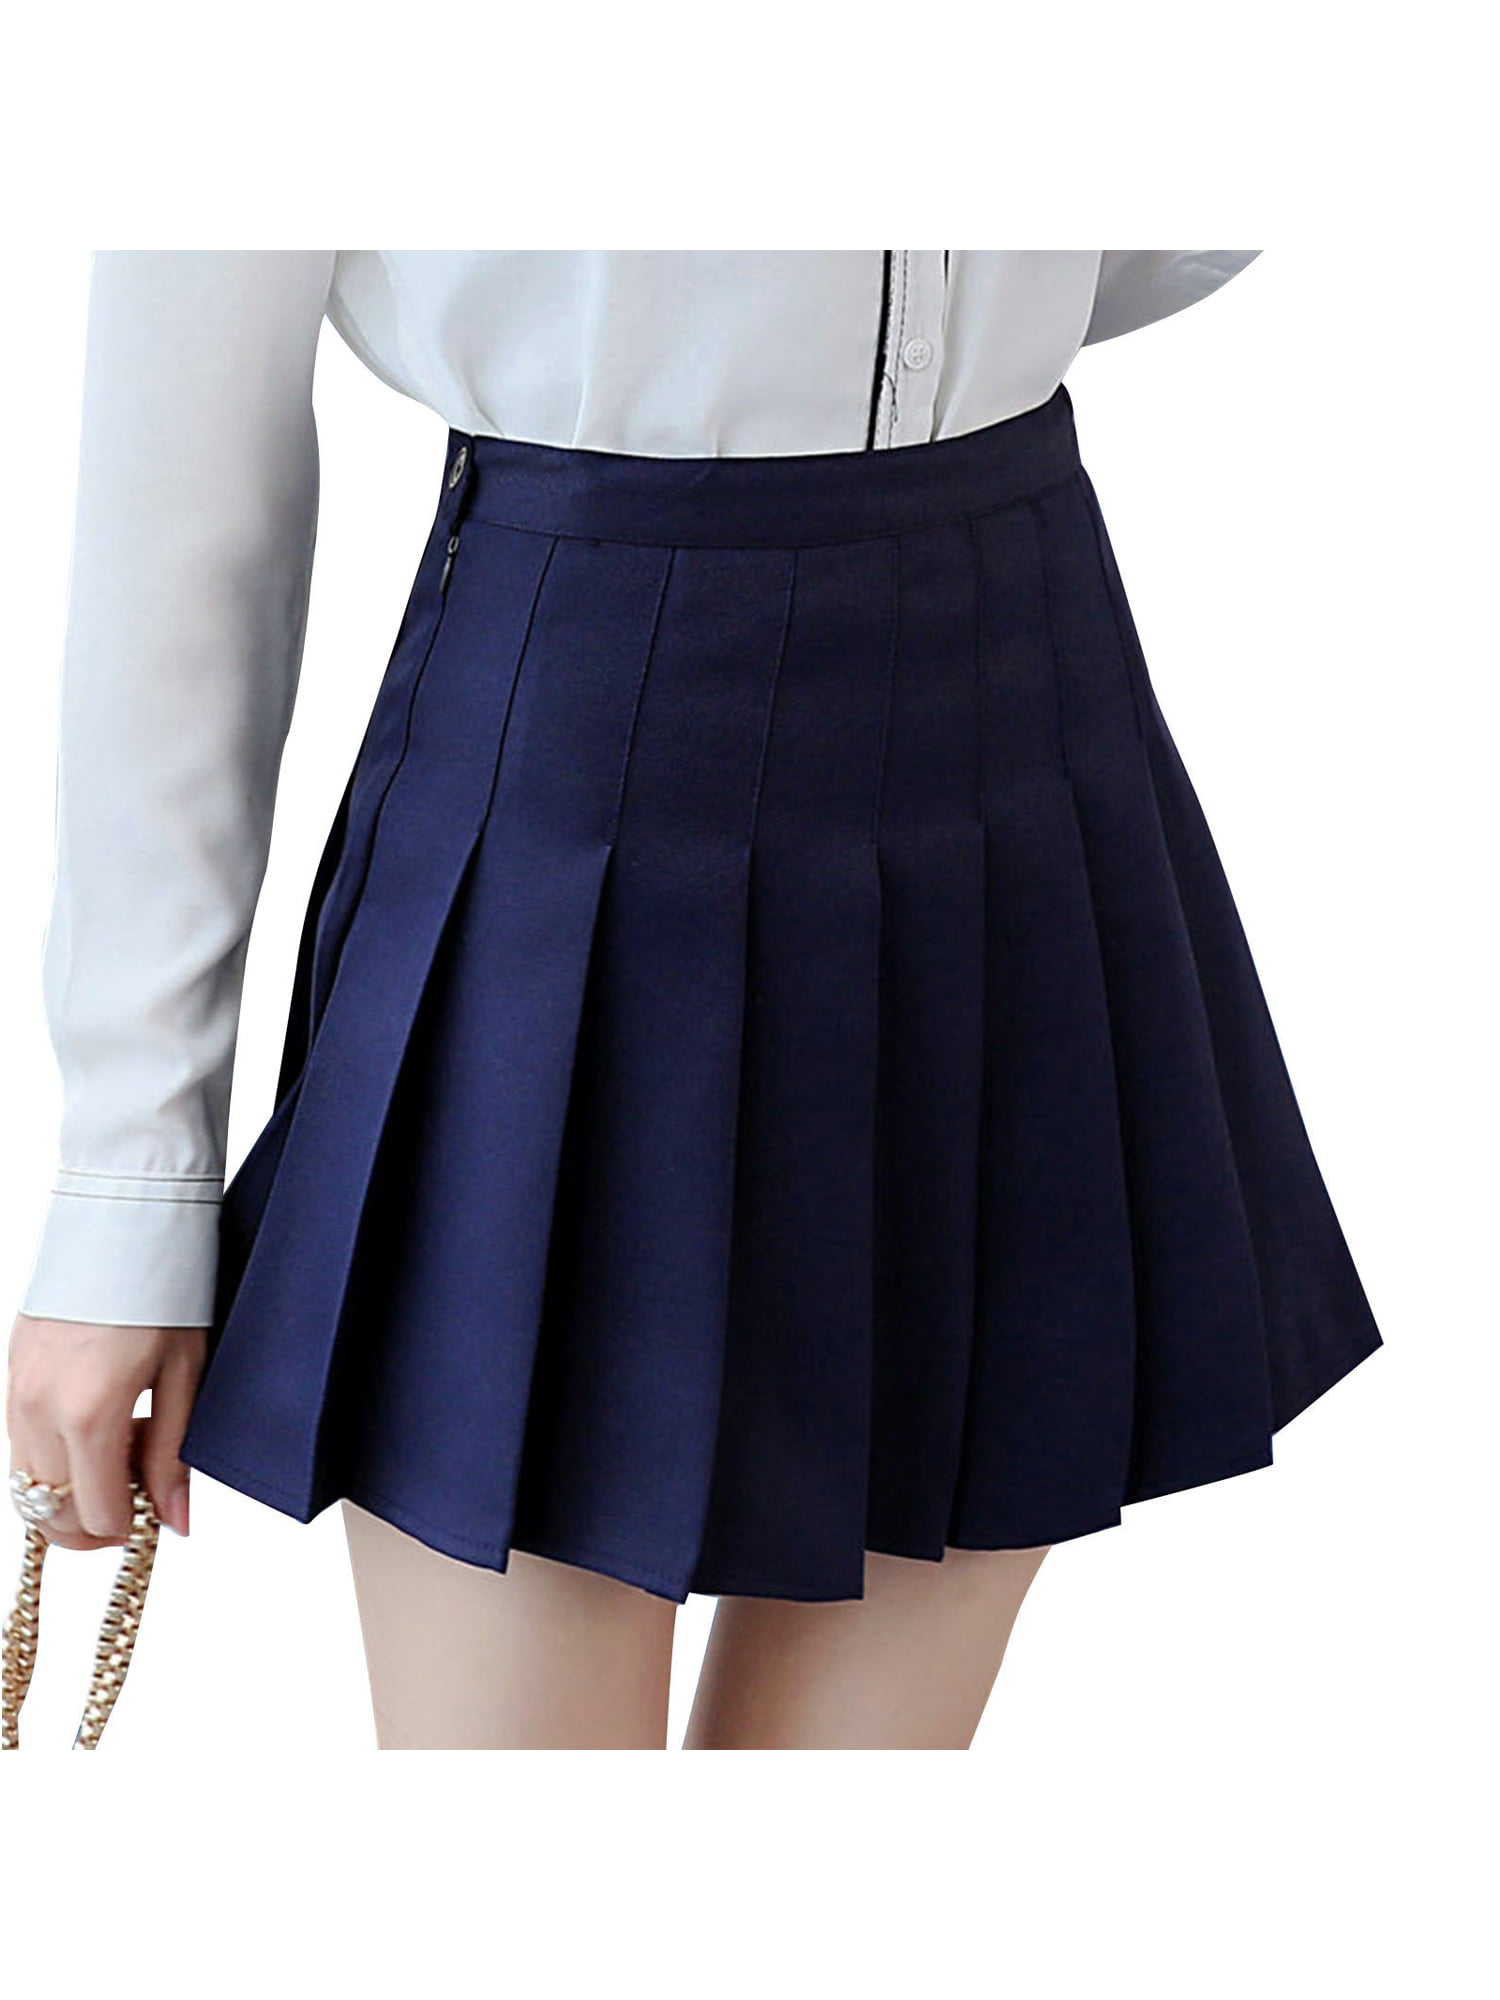 Meihuida Women Girls Pleated Tennis Skirt 